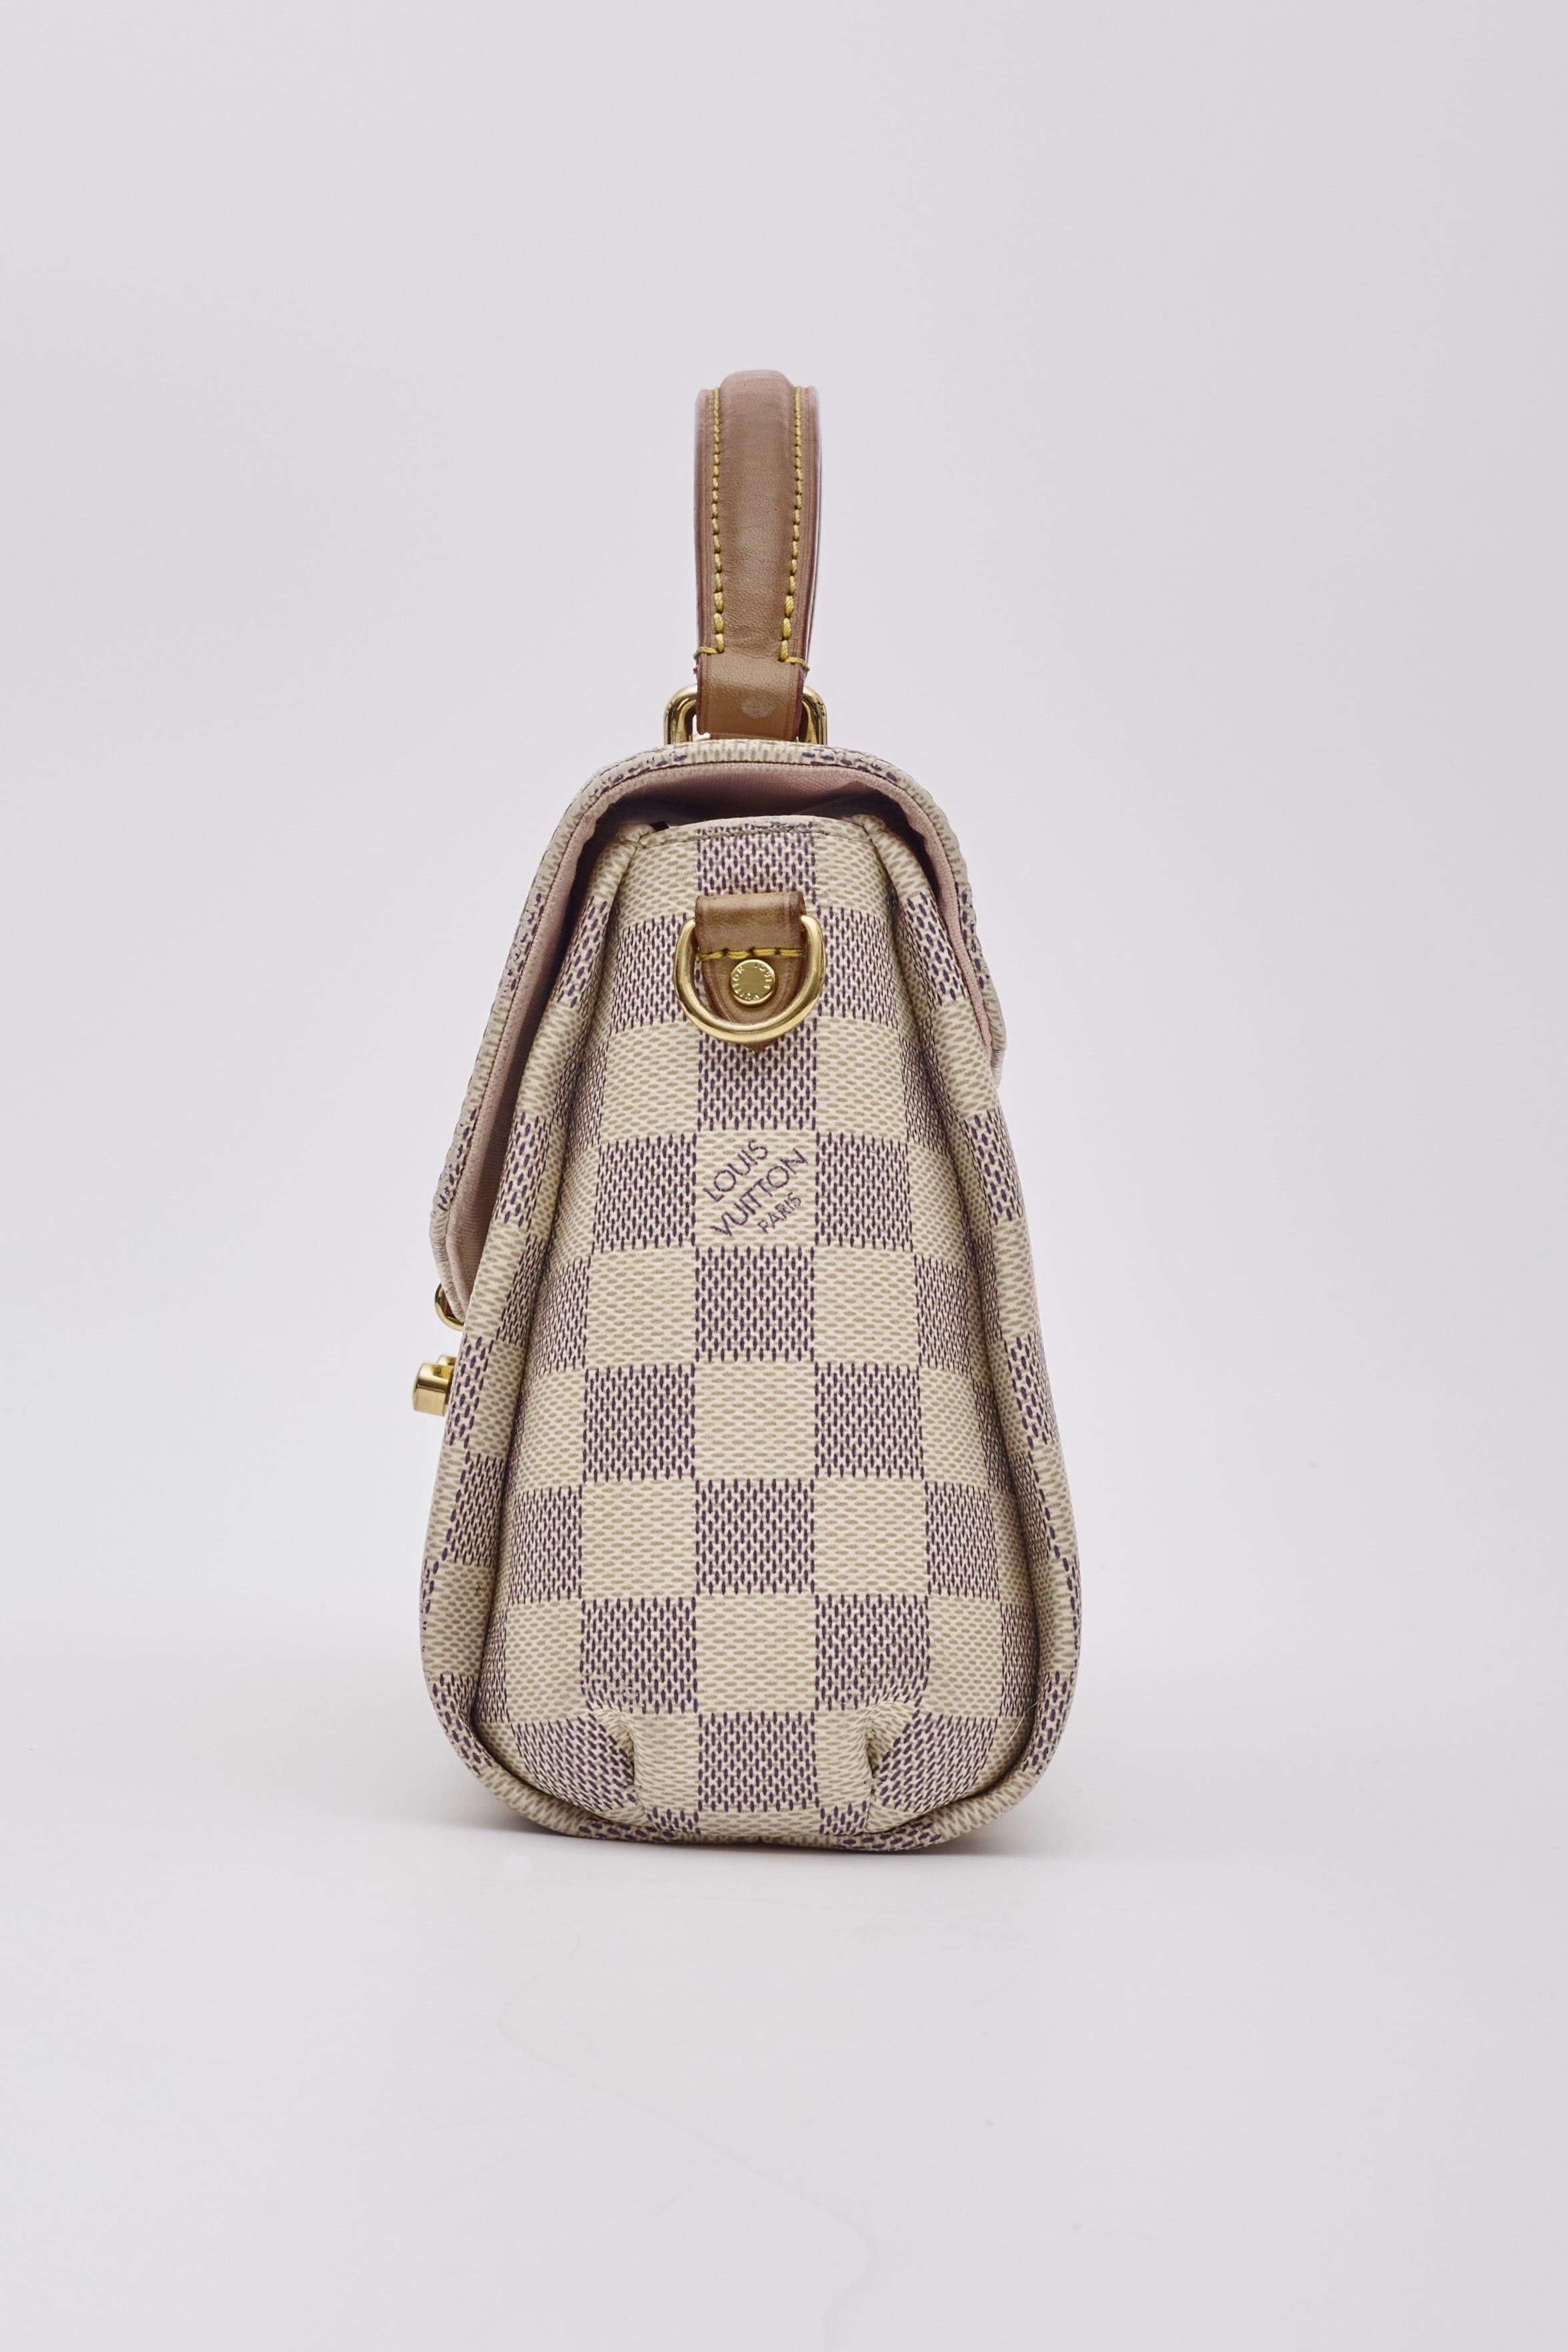 Louis Vuitton Damier Azur Croisette Shoulder Bag In Good Condition For Sale In Montreal, Quebec